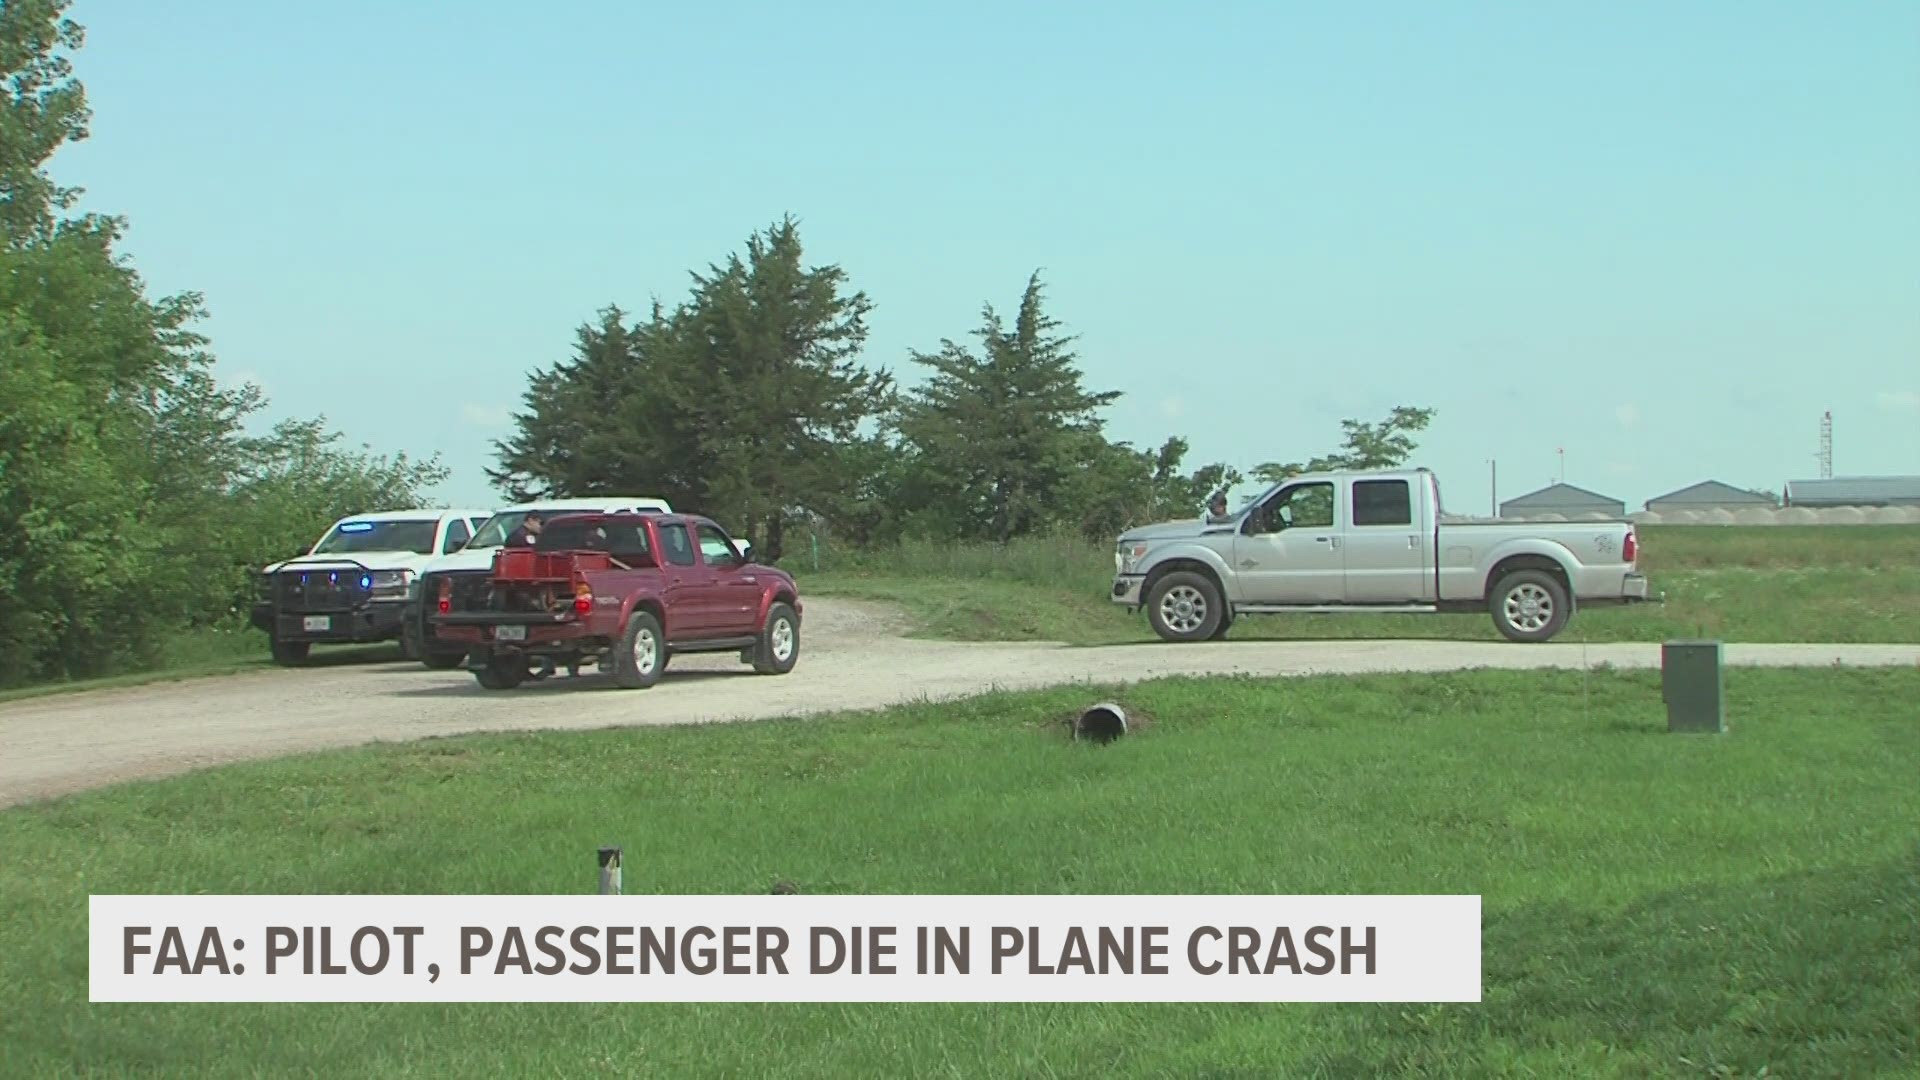 According to Flight Aware, the plane took off from Creston a minute before crashing near Lamoni.